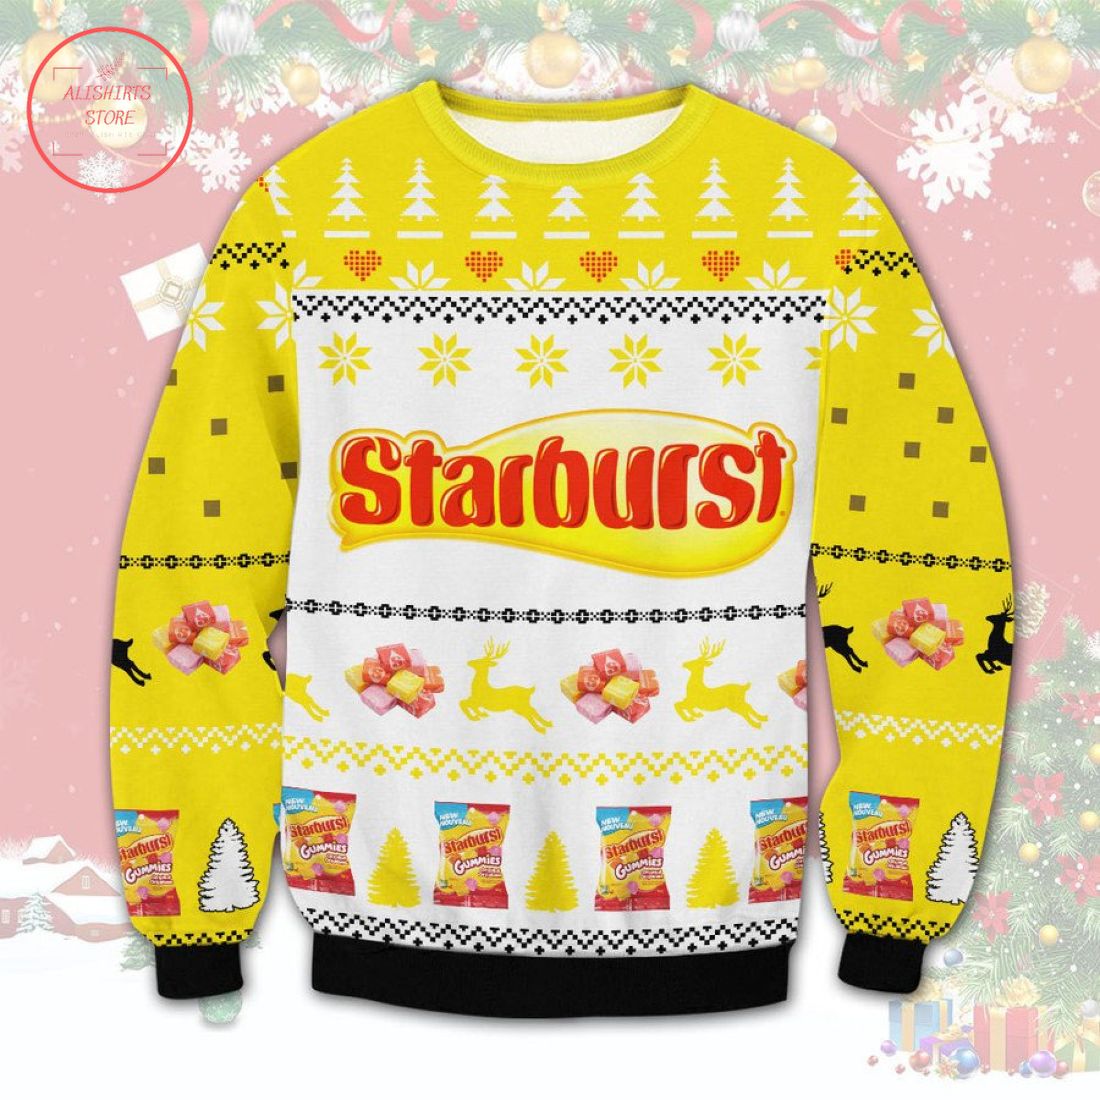 Starburst Gummies Ugly Christmas Sweater